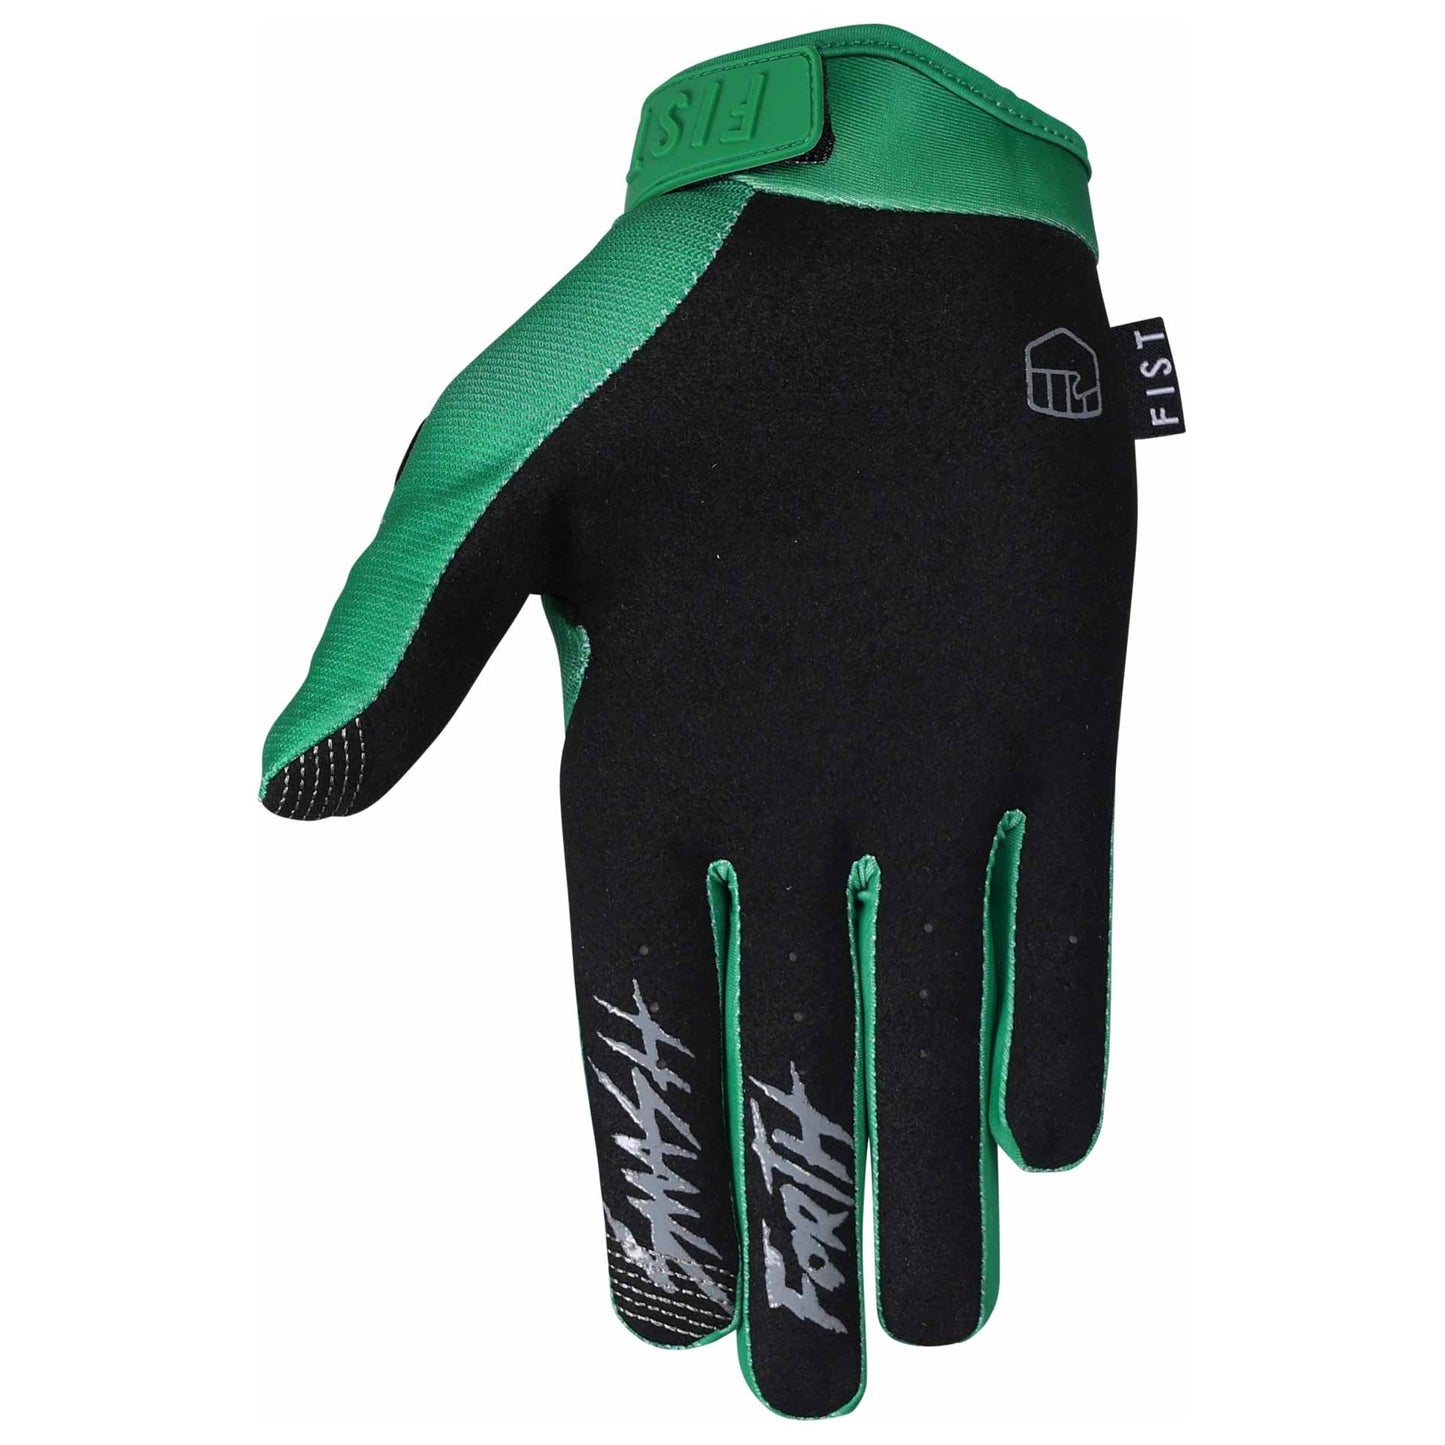 Fist Handwear Stocker Strapped Glove - L - Green